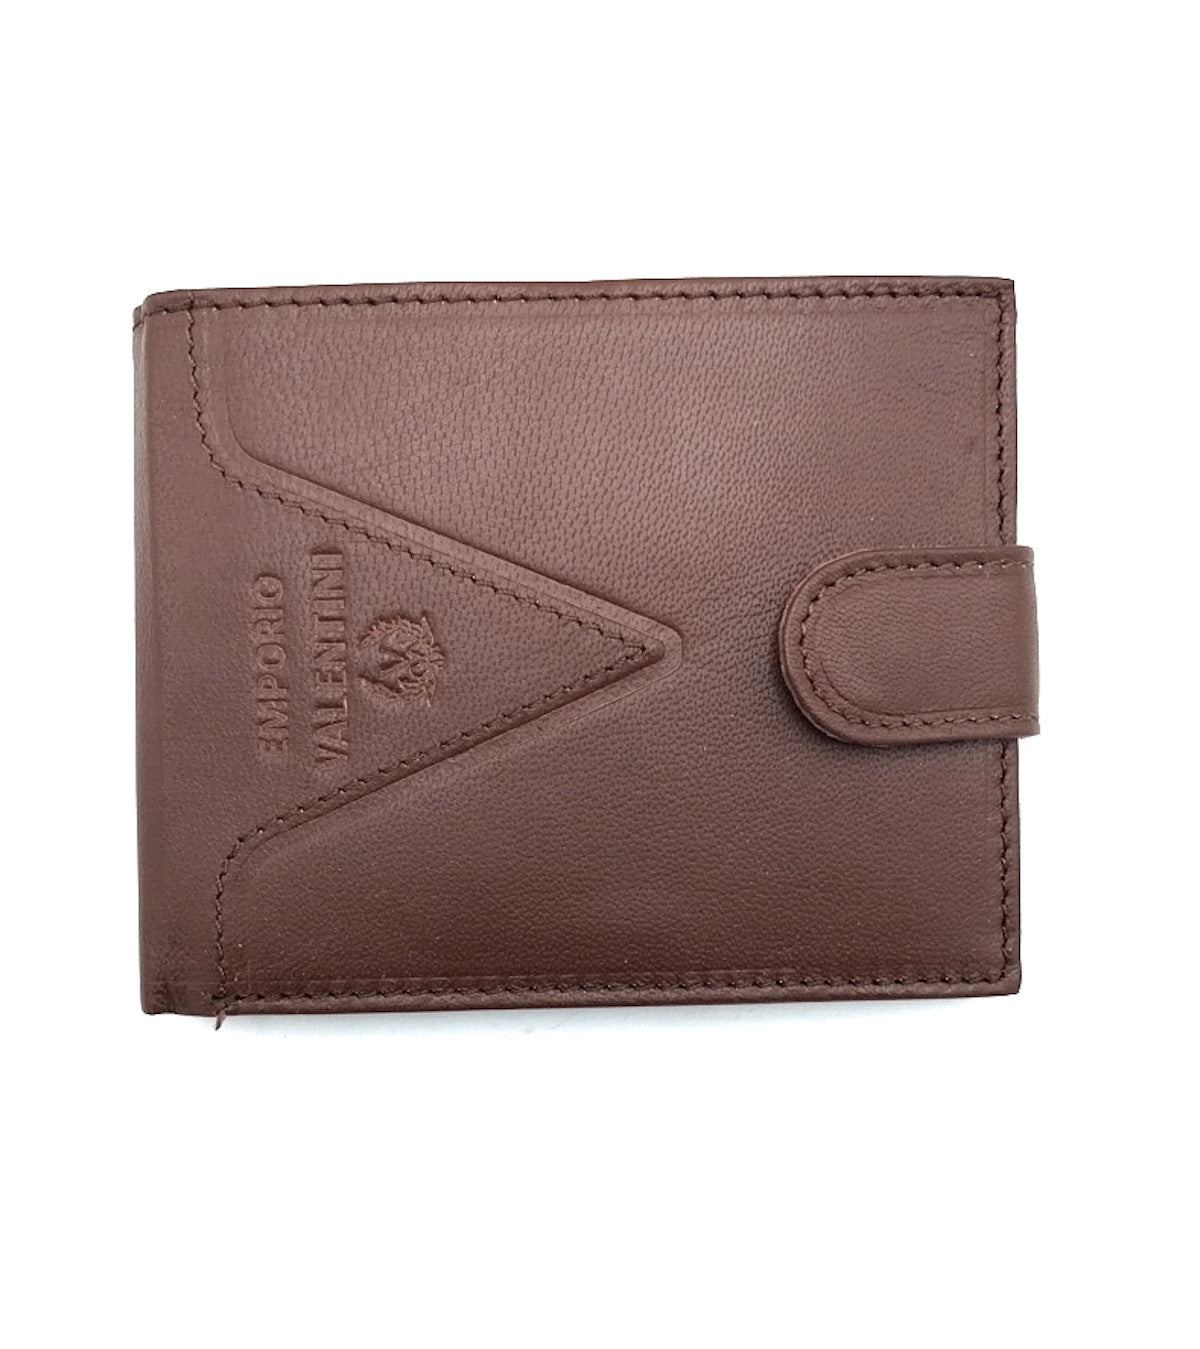 Genuine leather wallet, Emporio Valentini, for men, art. 7561